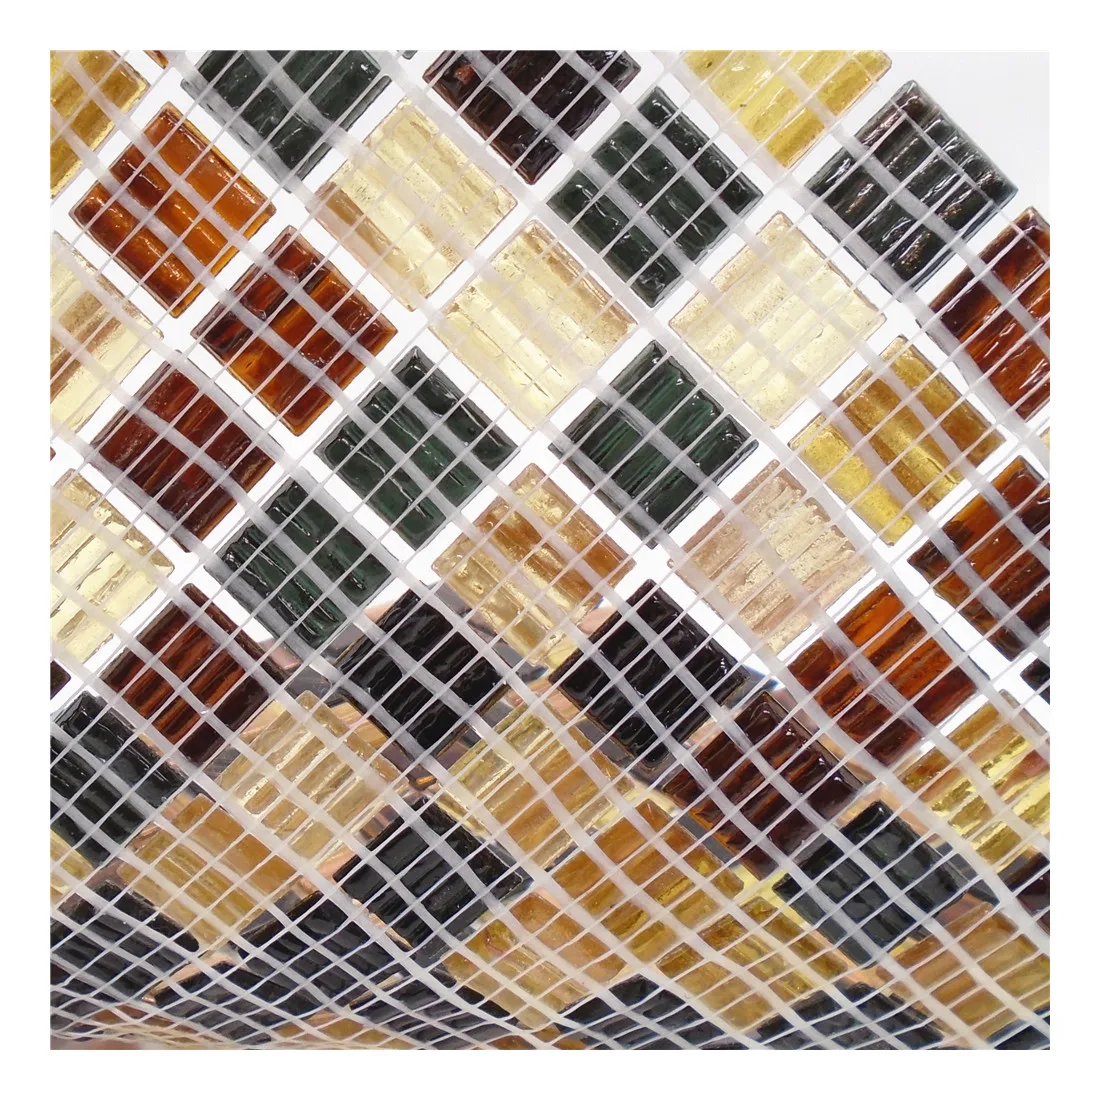 Hexagon mosaic plastic mesh mosaic tiles backing net mesh